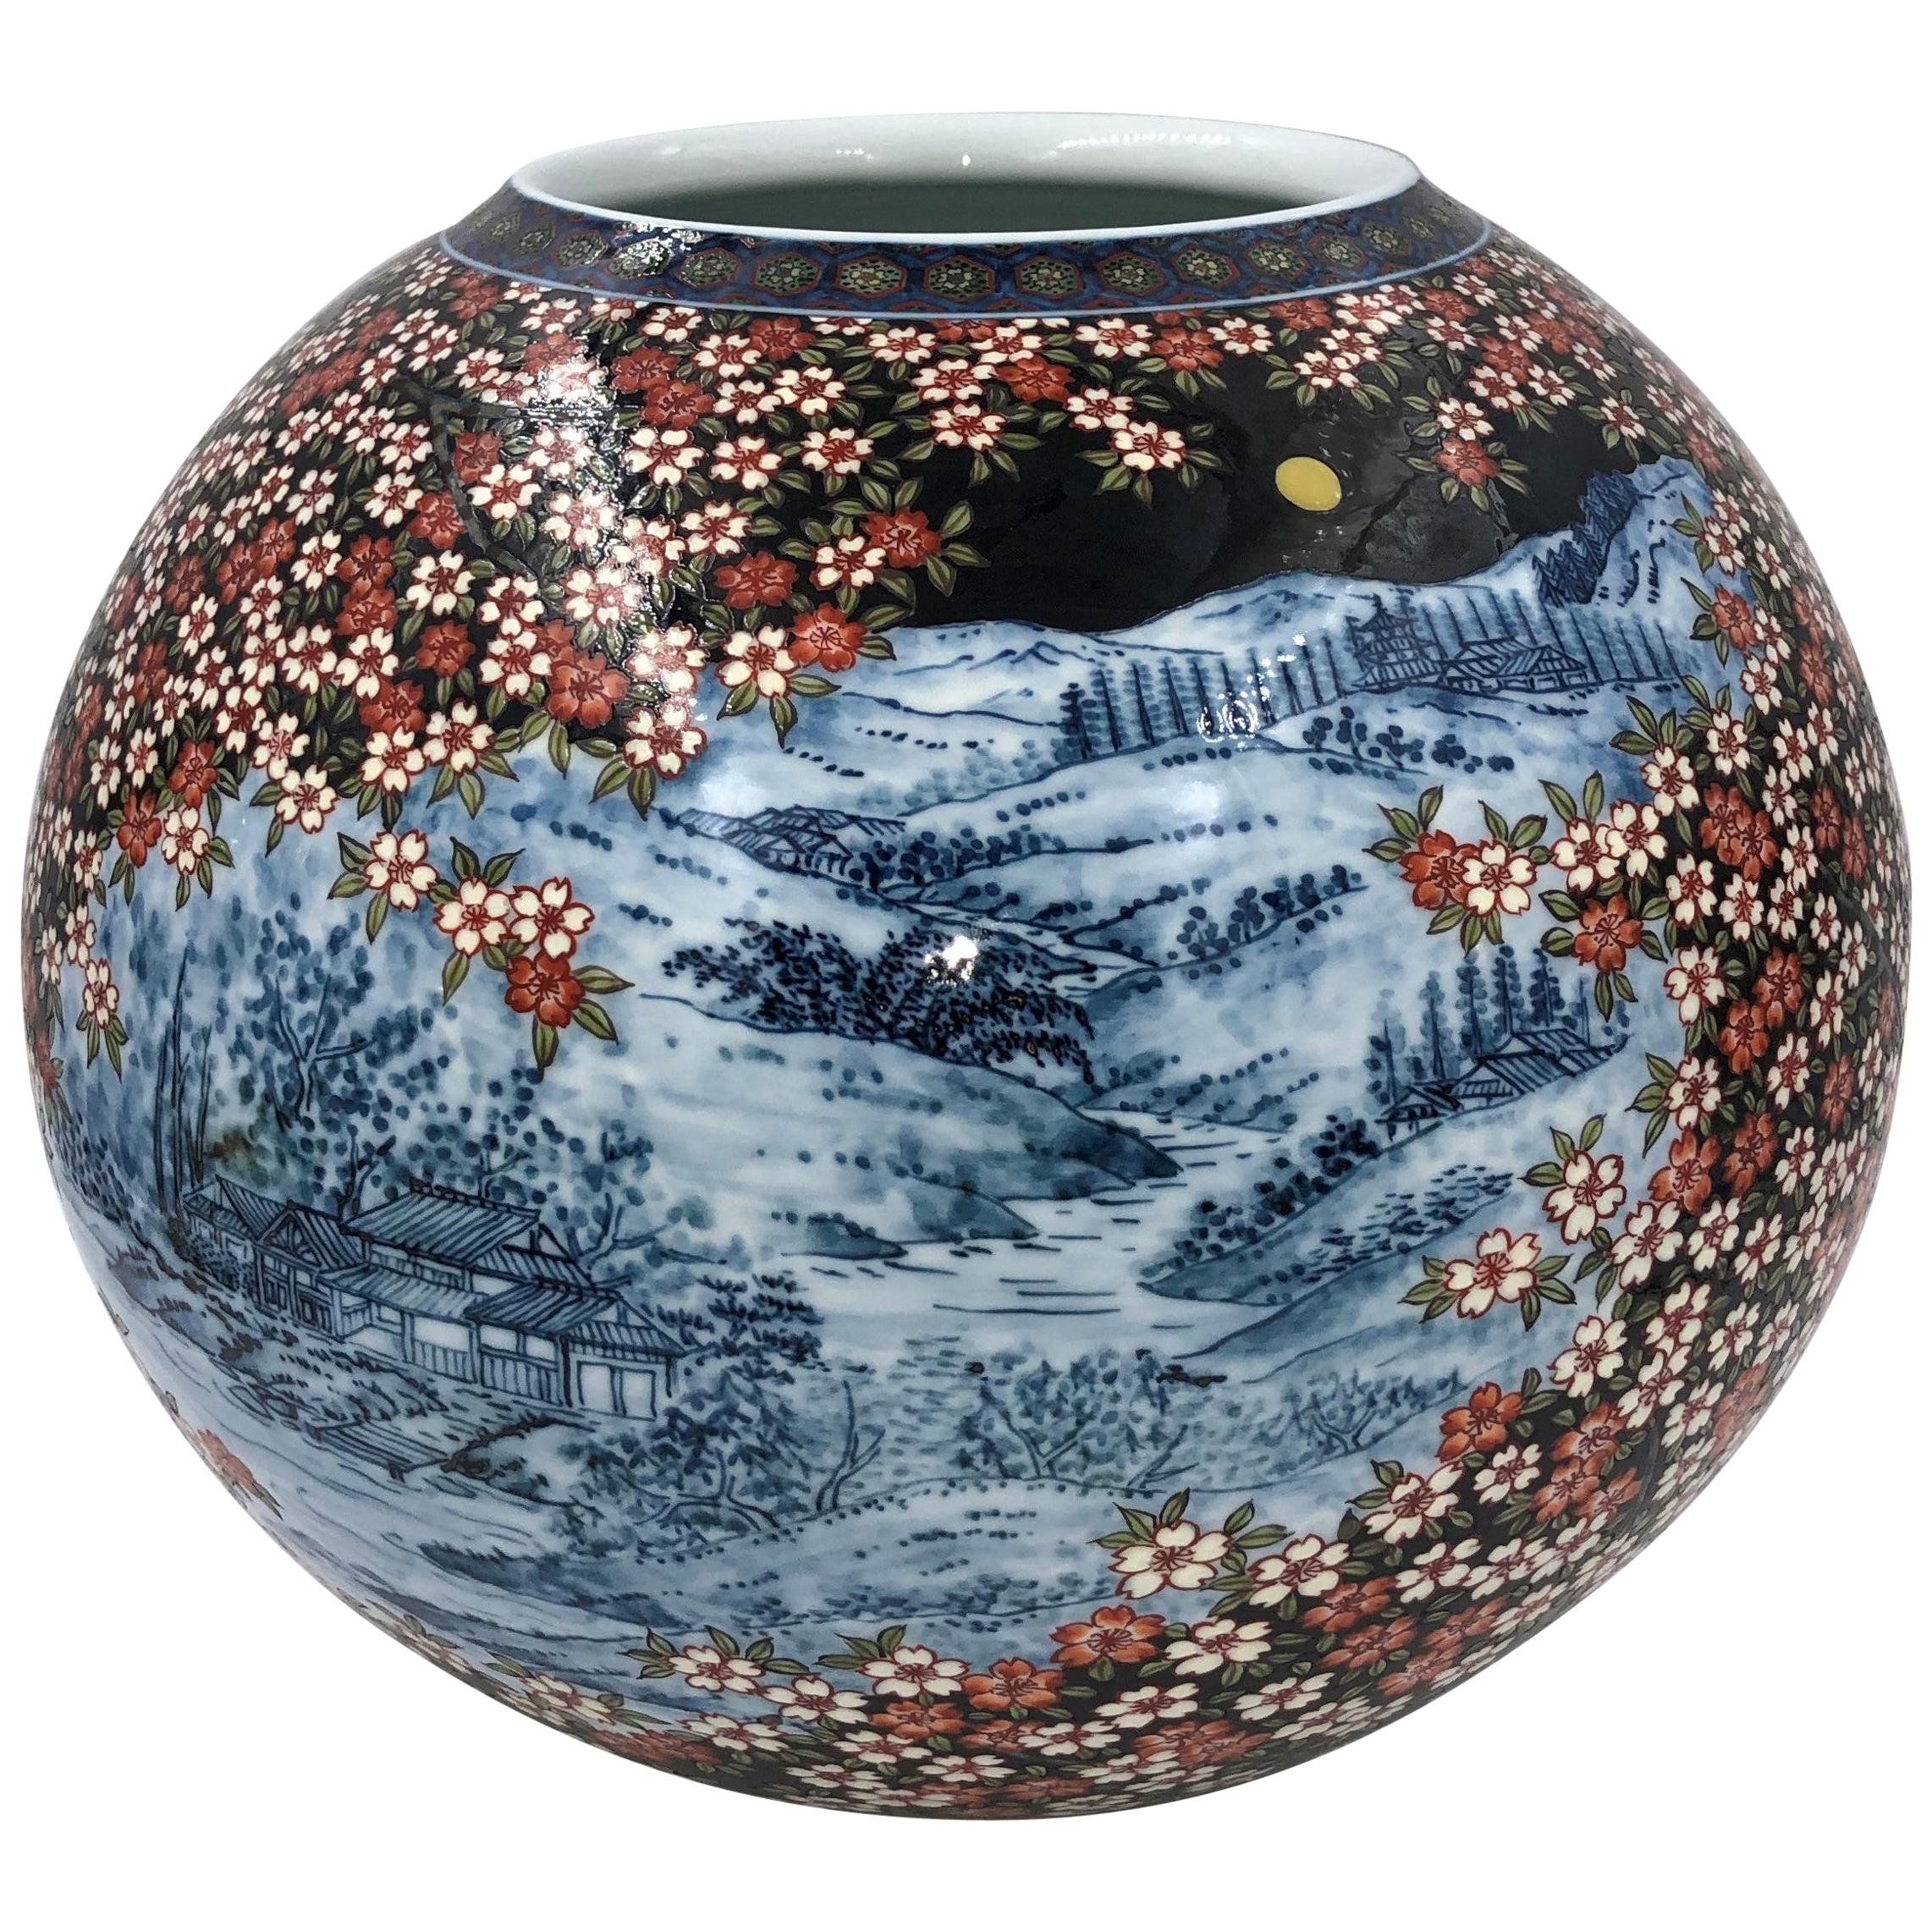 Japanese Contemporary Black Blue Red Porcelain Vase by Master Artist, 2